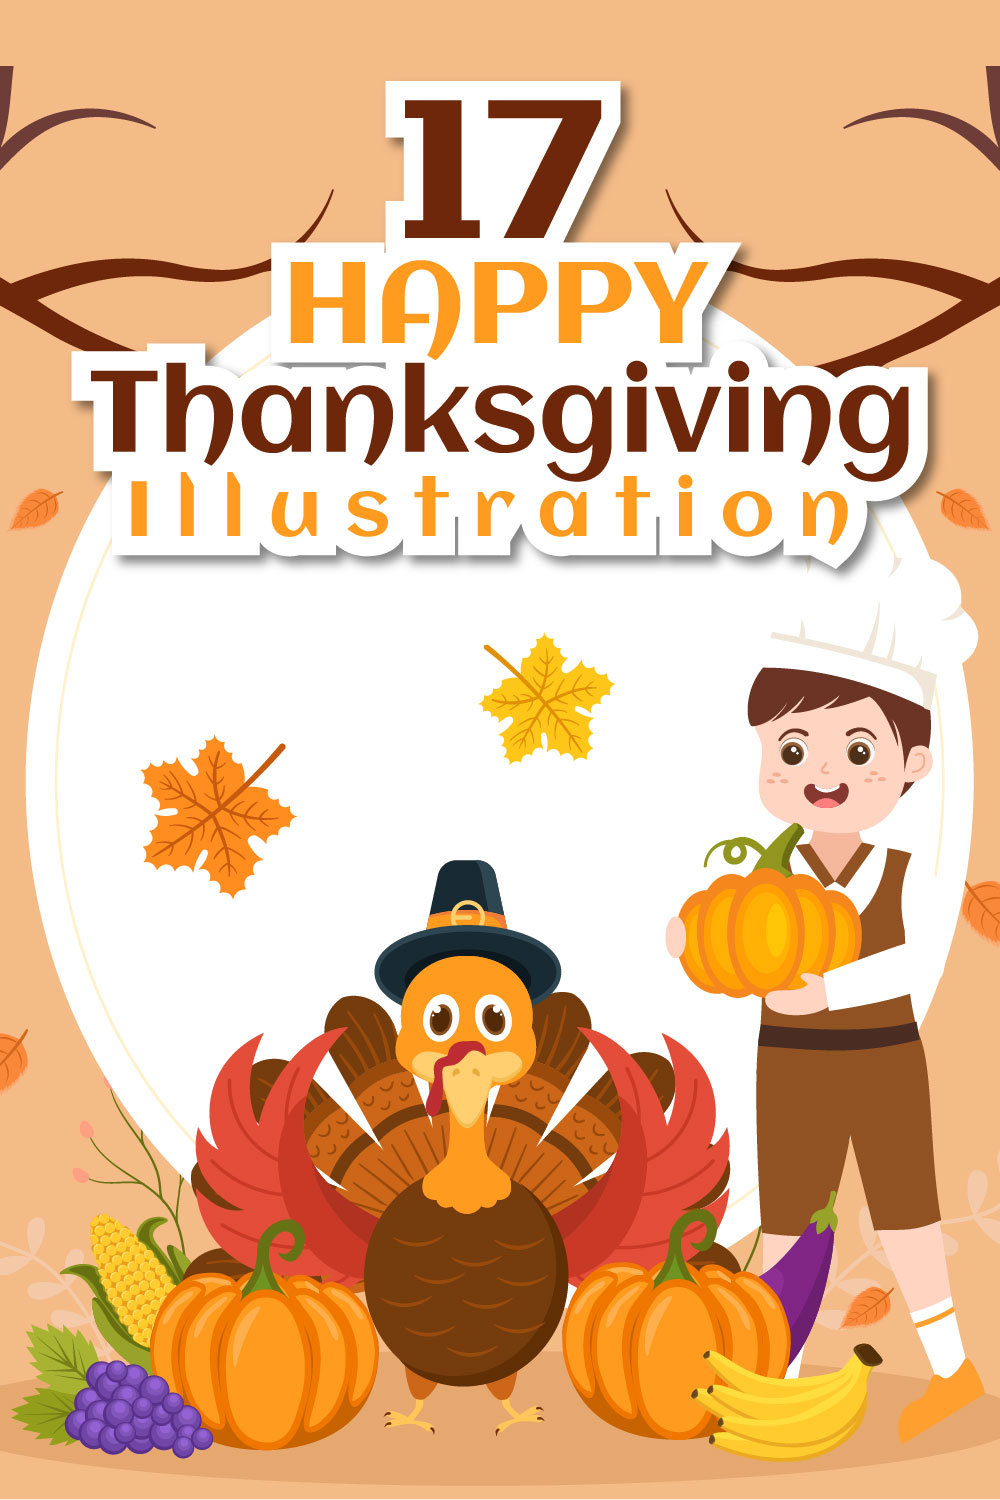 17 Happy Thanksgiving Illustration Pinterest Image.